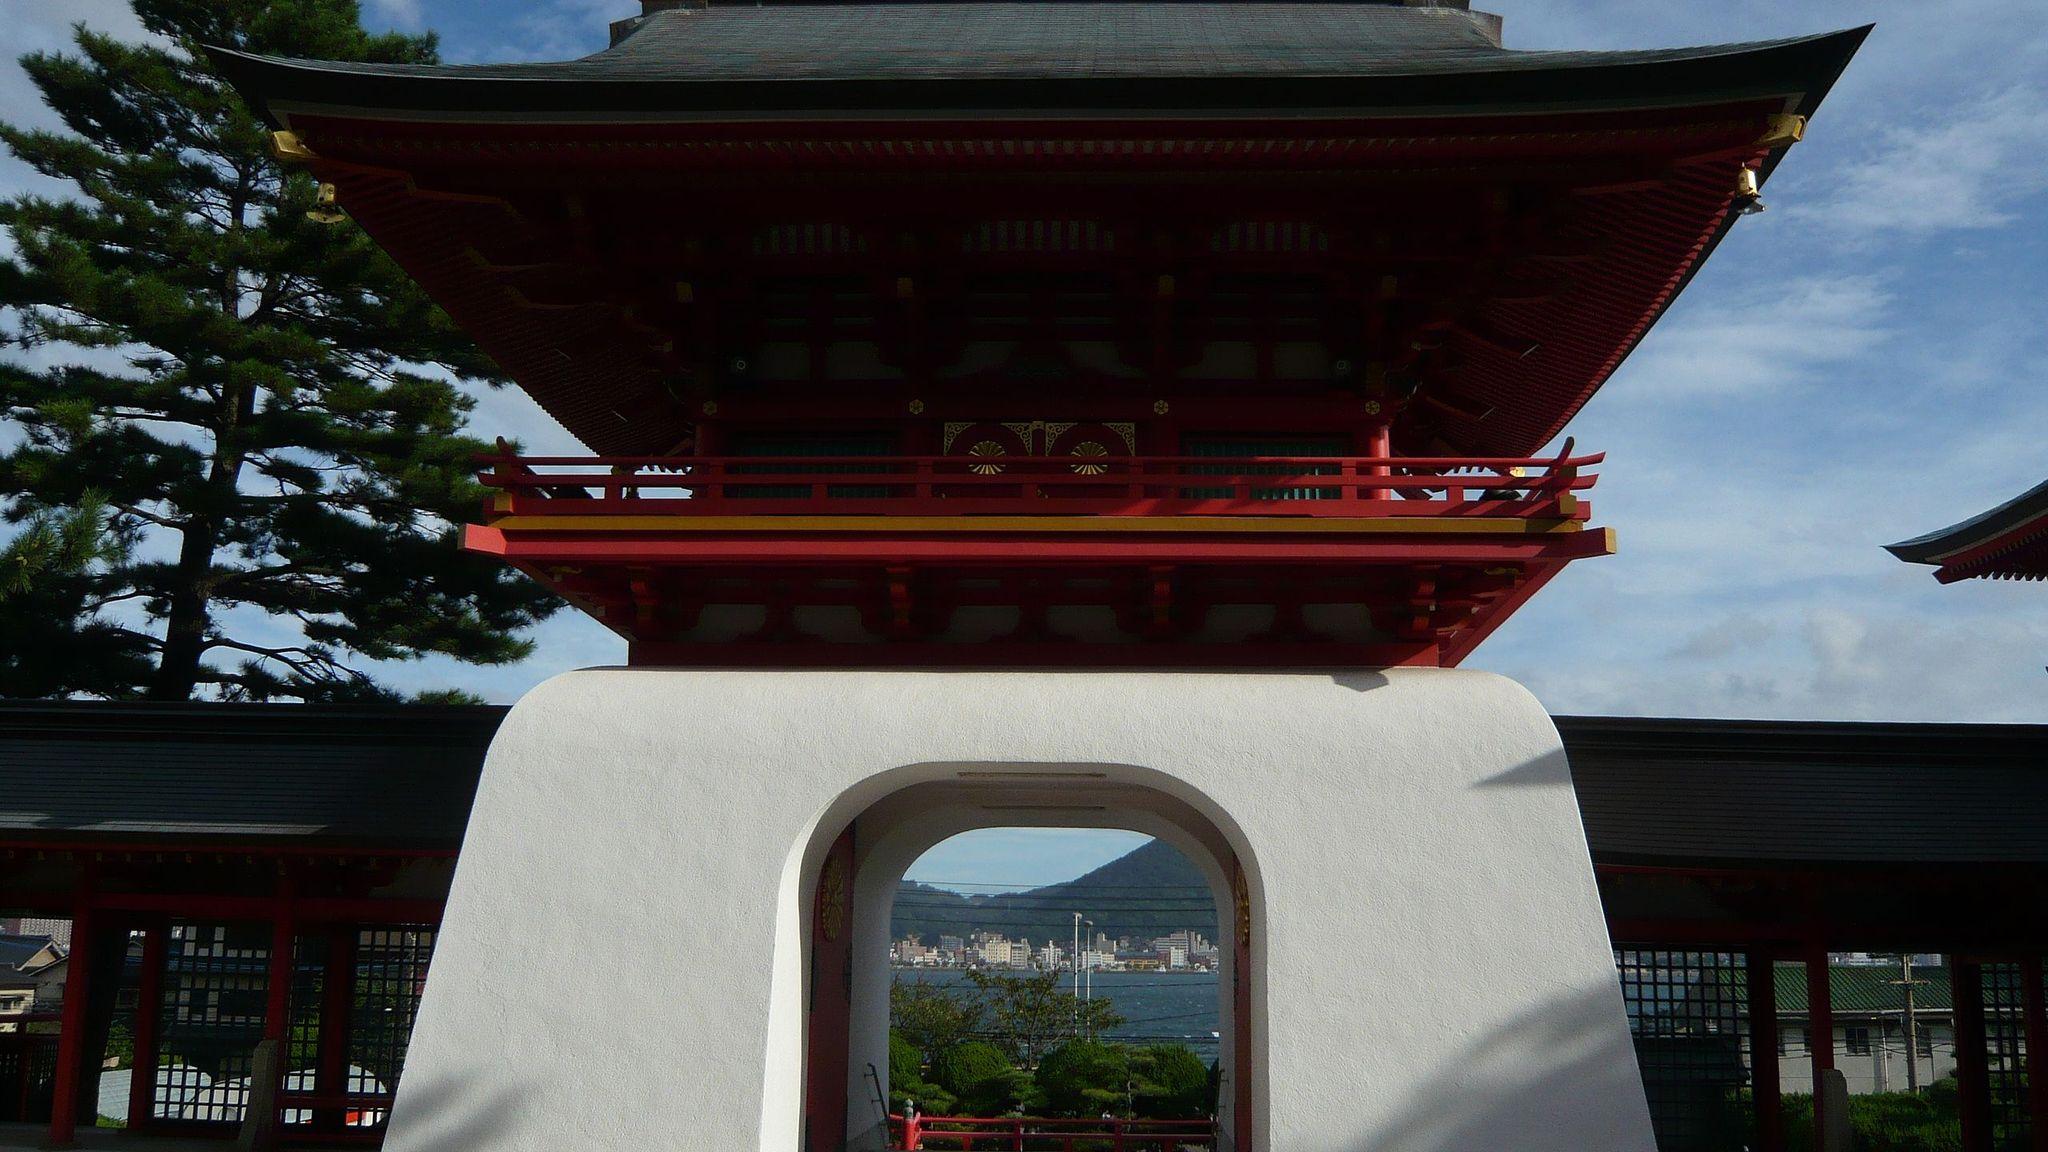 The Suiten-mon of Akama-jingū in Shimonoseki